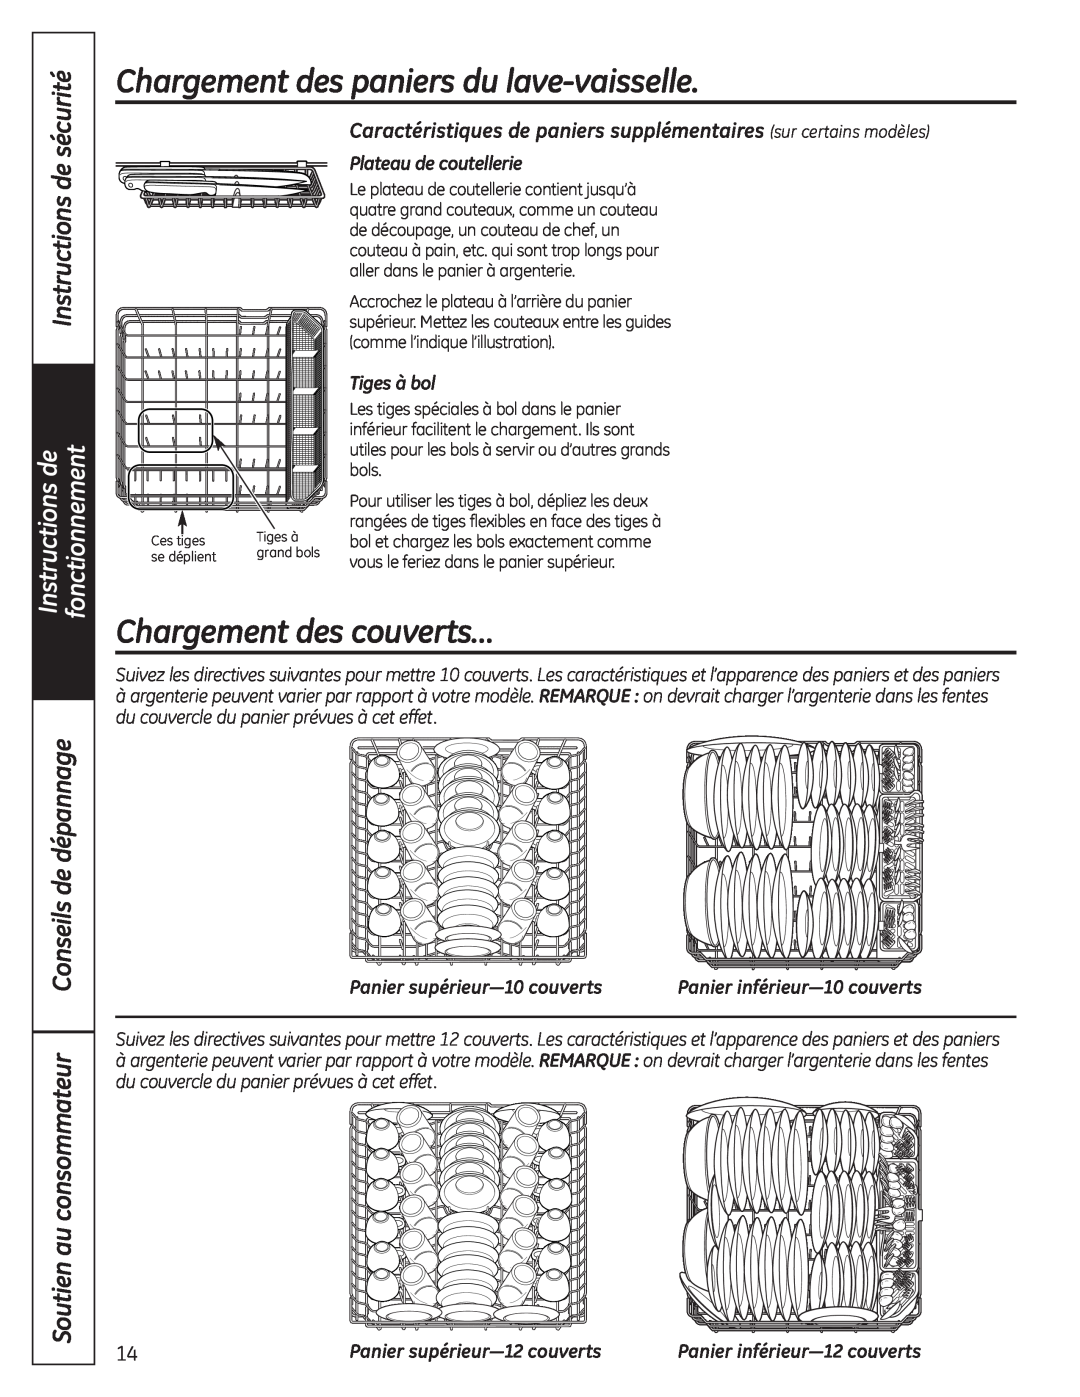 GE Stainless Steel Tub Dishwasher manual Chargement des paniers du lave-vaisselle, Chargement des couverts…, Tiges à bol 